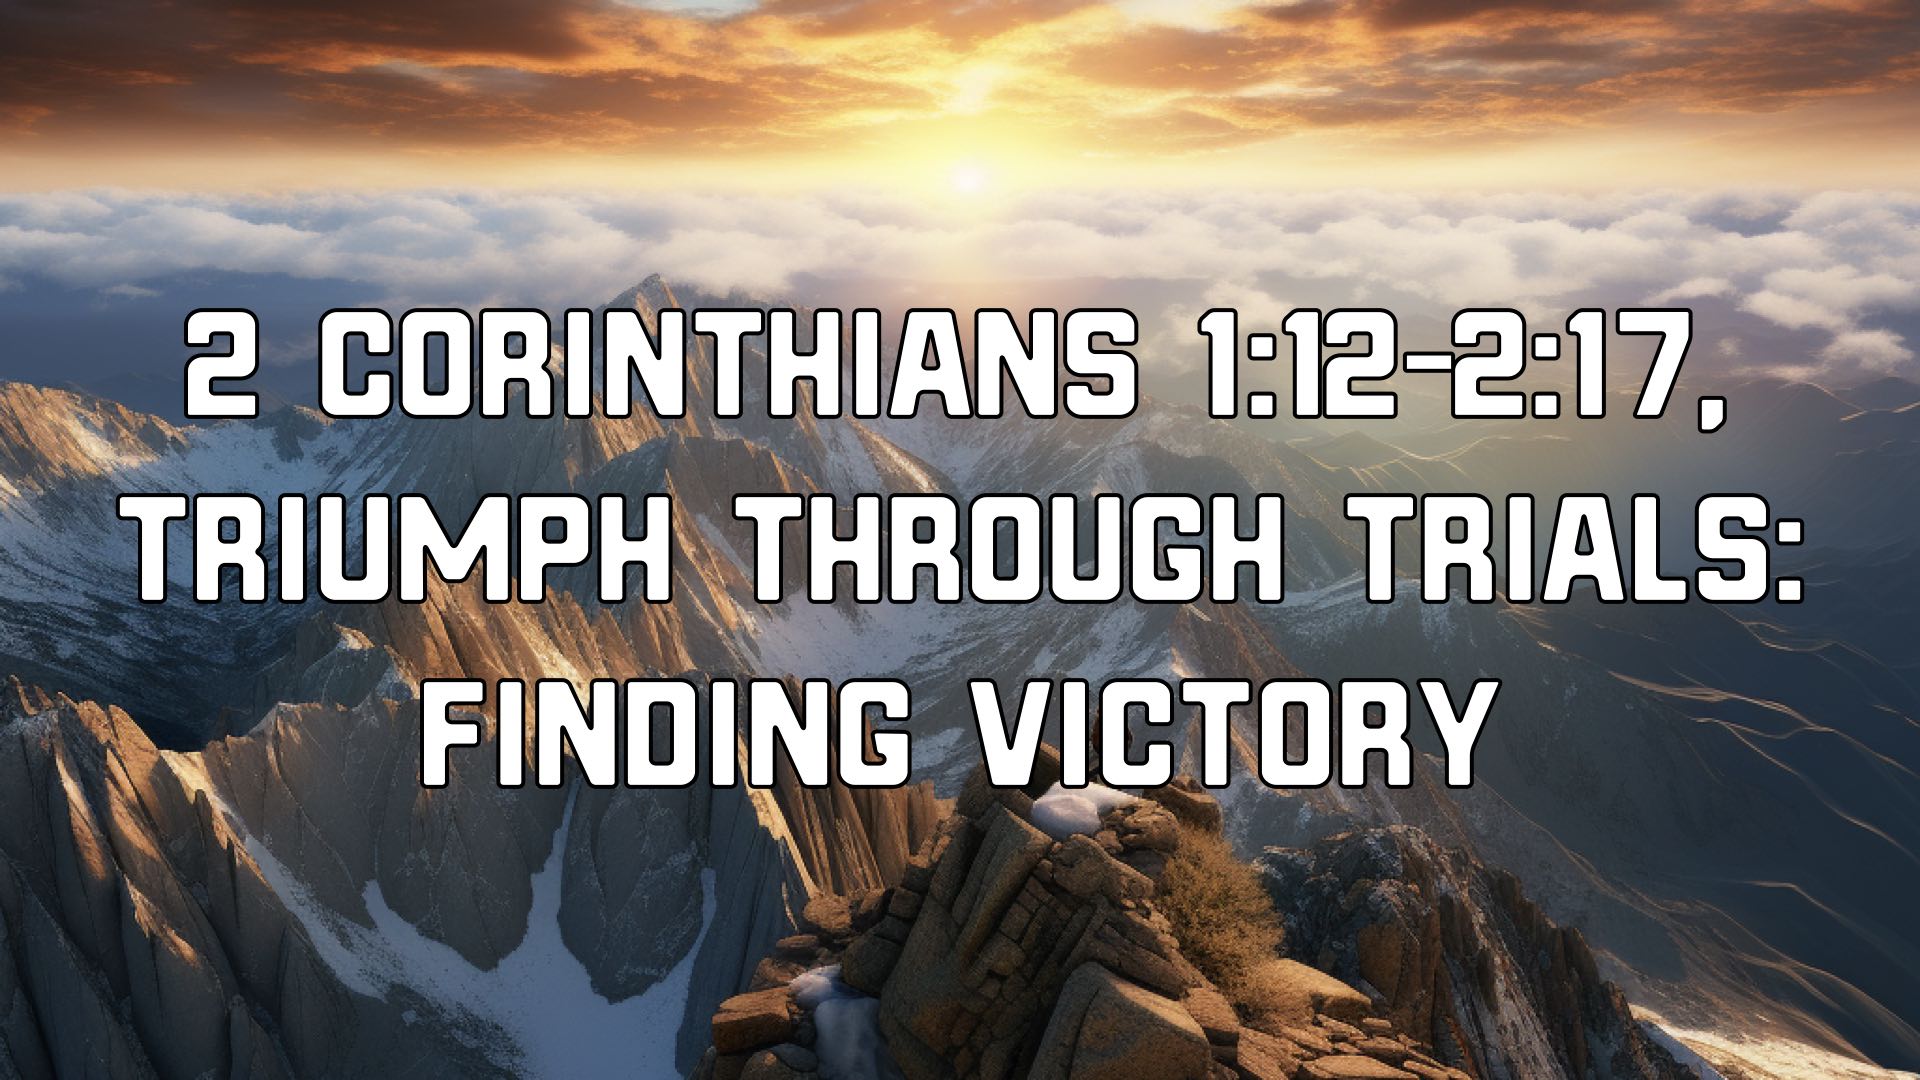 2 Corinthians 1:12-2:17, Triumph through Trials: Finding Victory